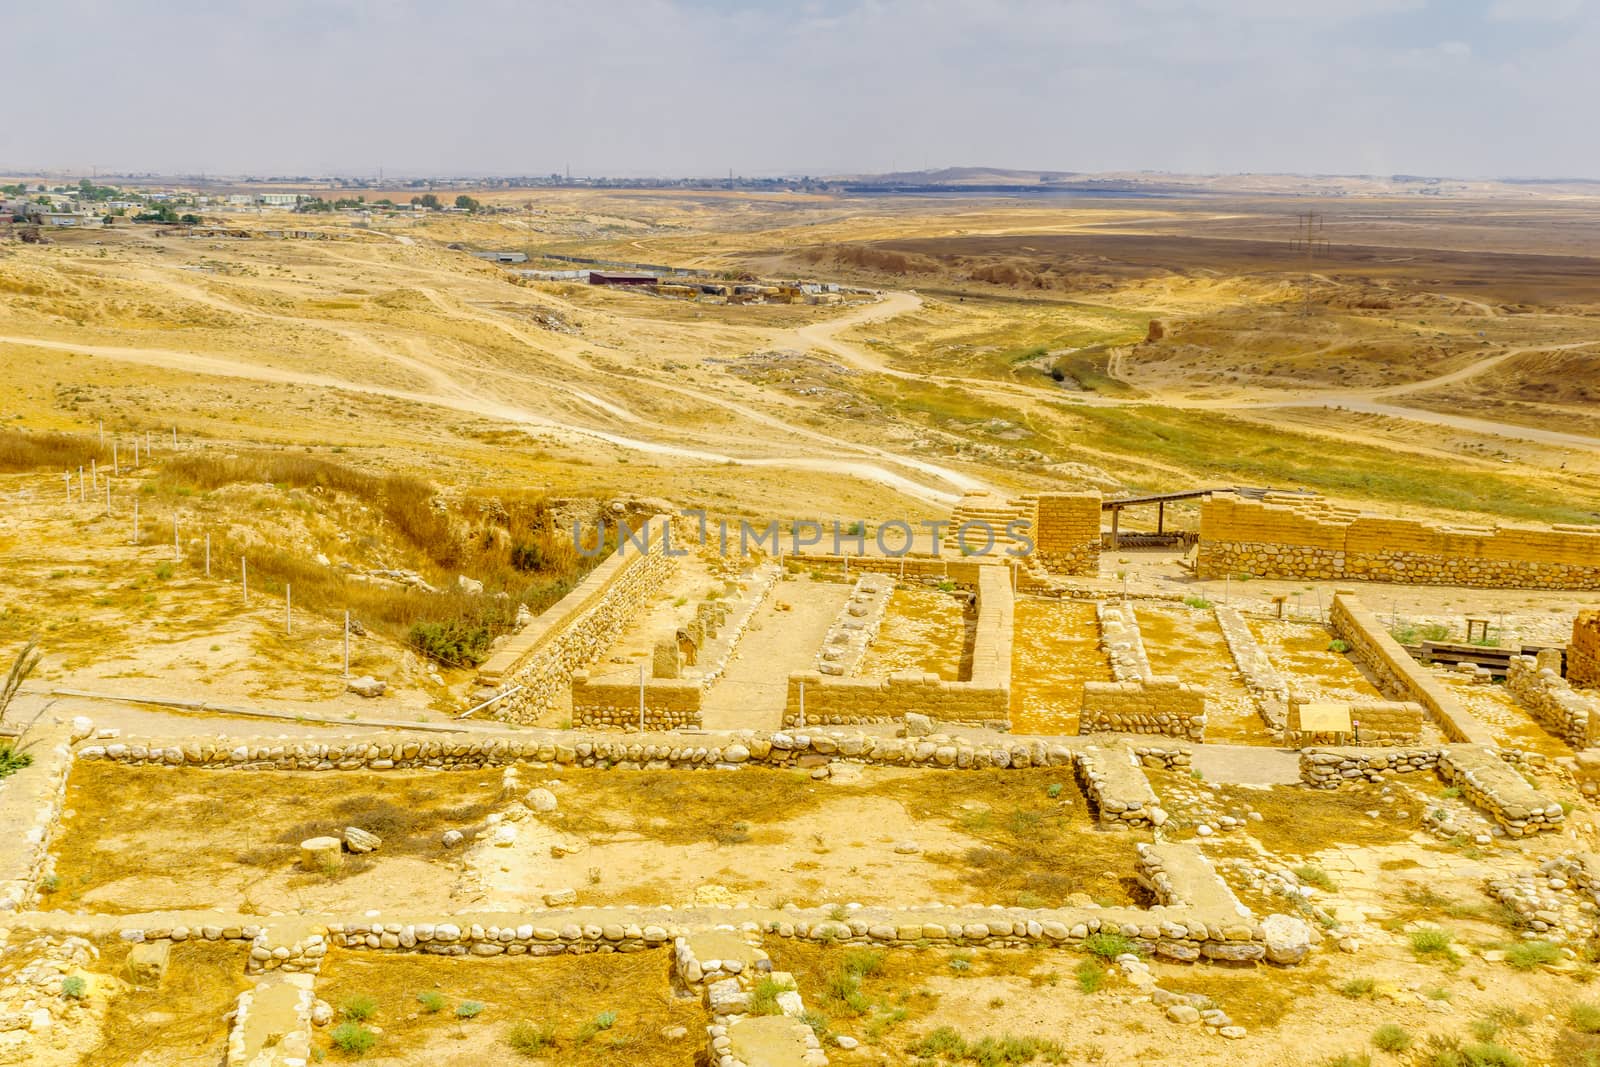 Tel Beer Sheva archaeological site by RnDmS